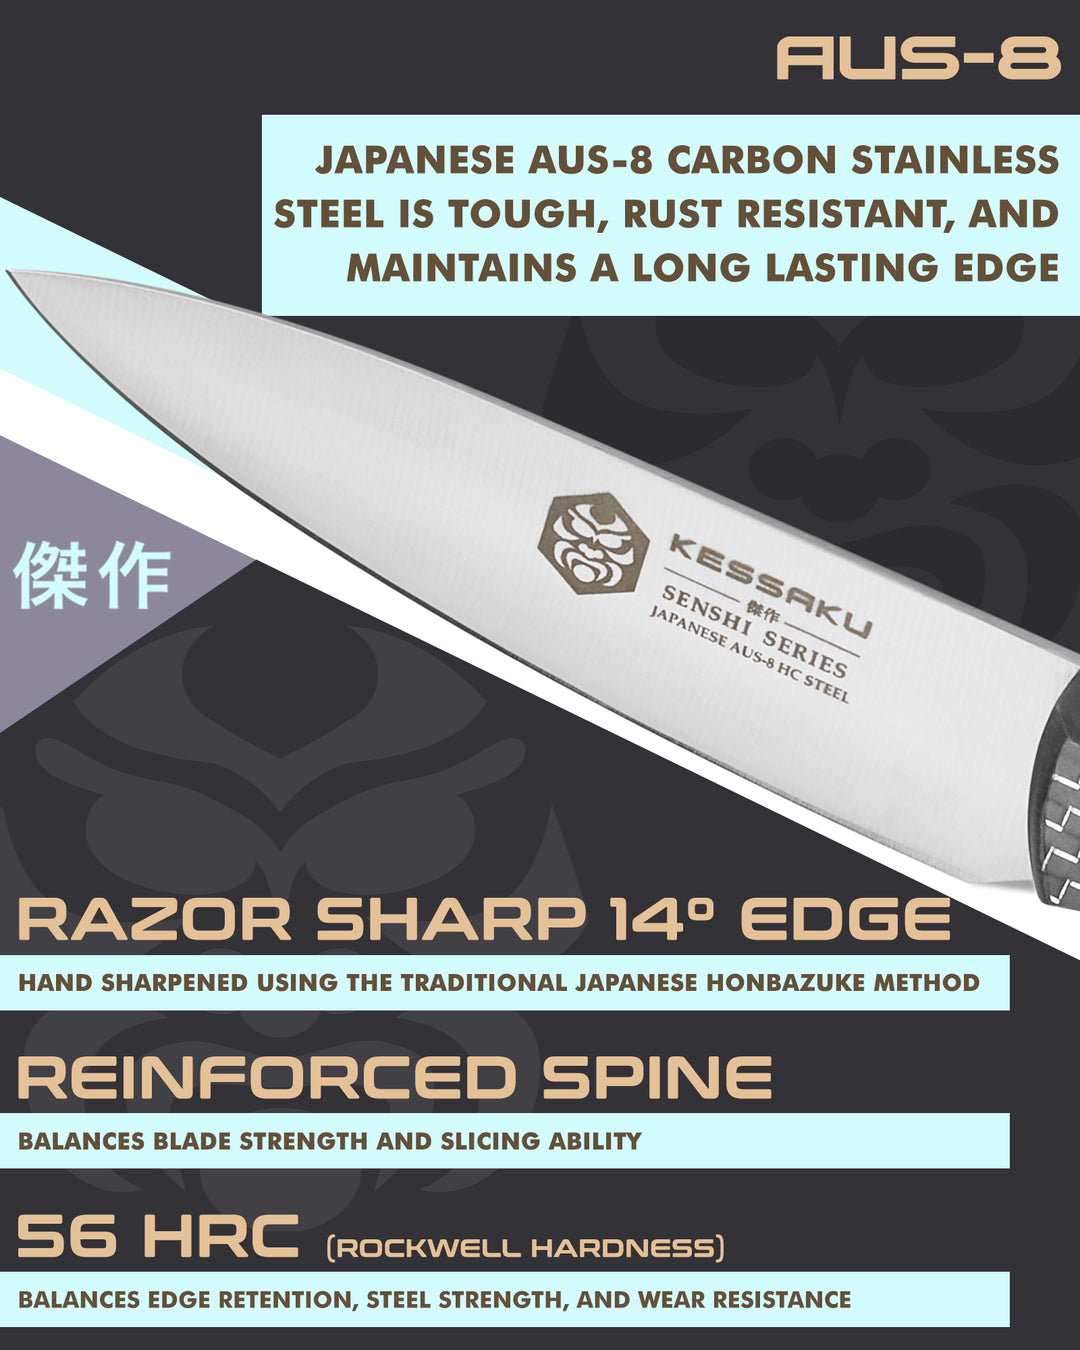 Kessaku Senshi Paring Knife blade features: AUS-8 steel, 56 HRC, 14 degree edge, reinforced spine